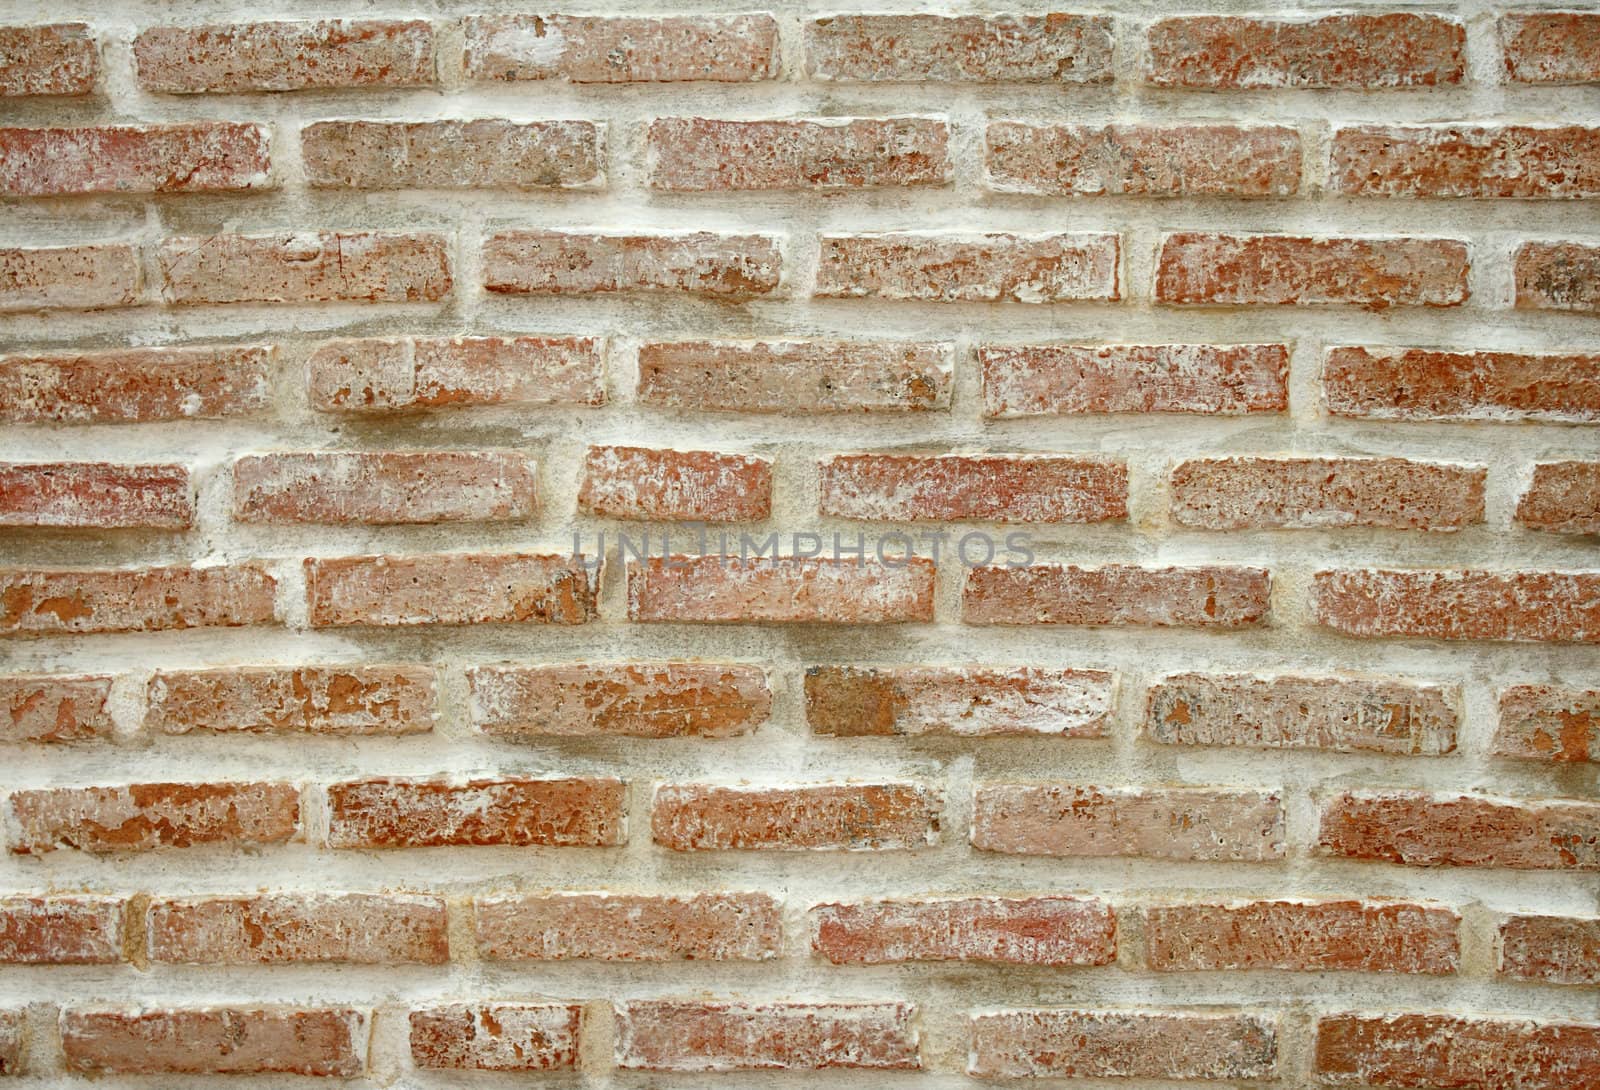 Brick Wall by liewluck